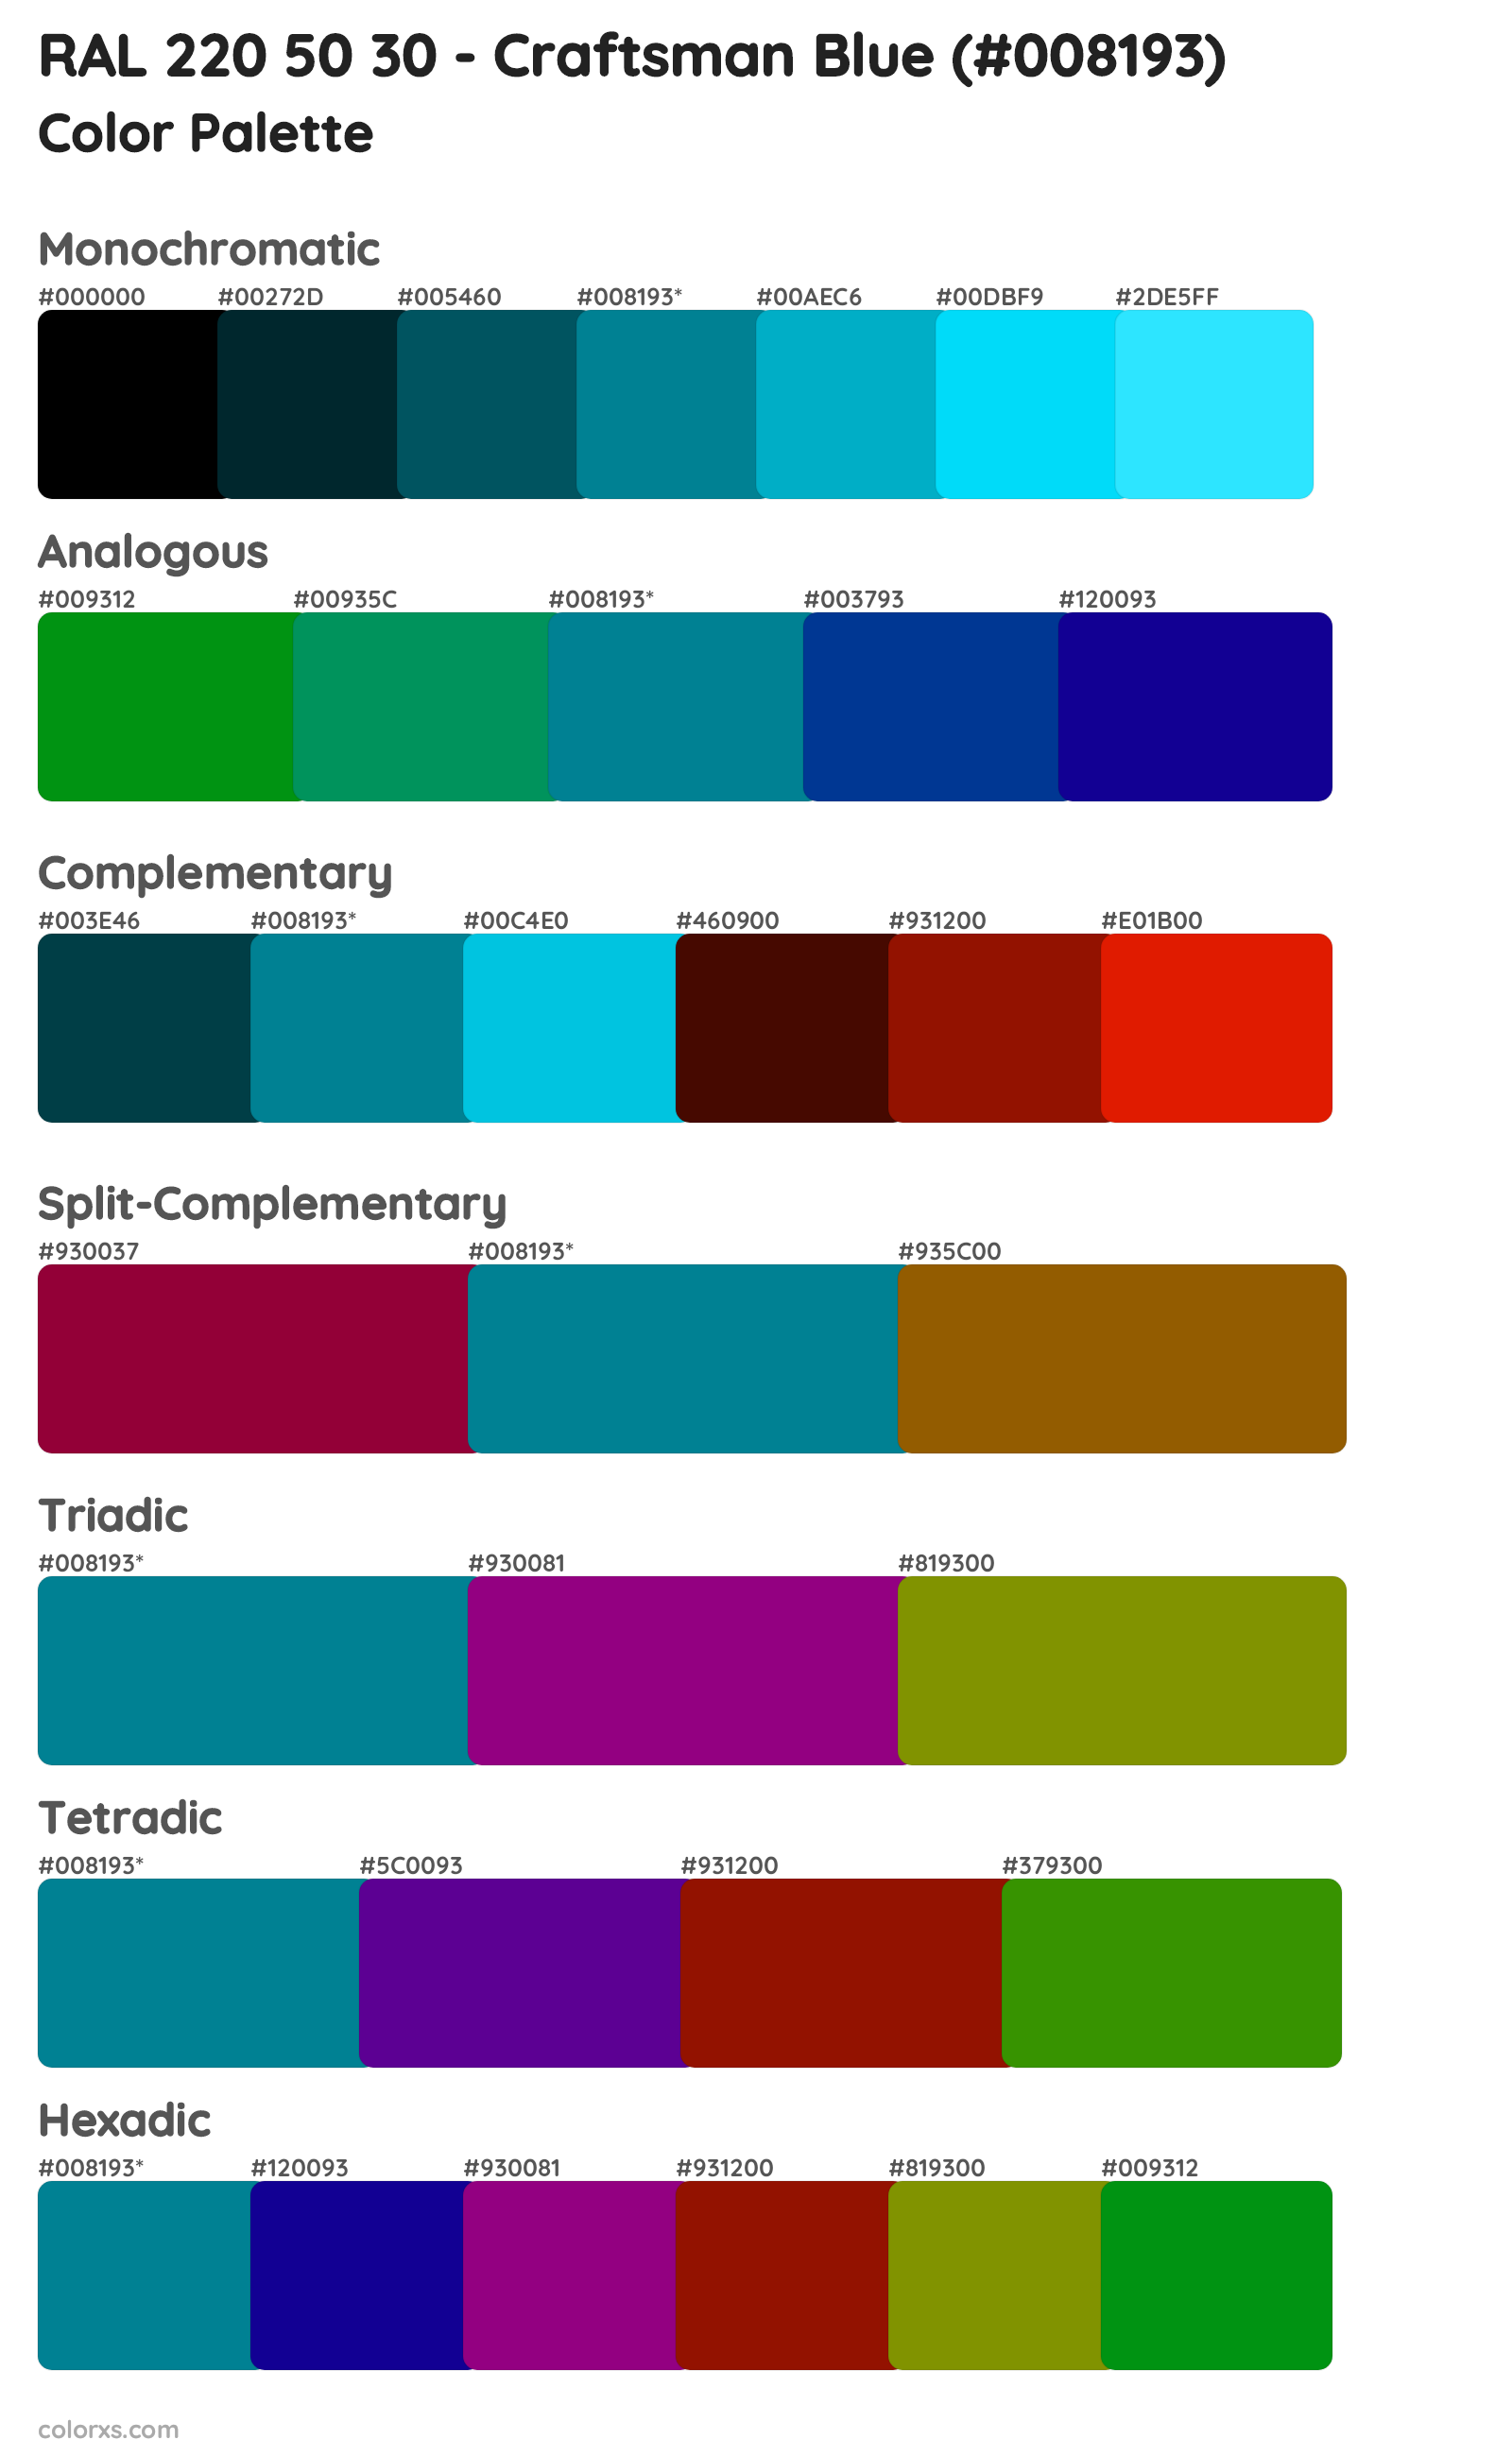 RAL 220 50 30 - Craftsman Blue Color Scheme Palettes